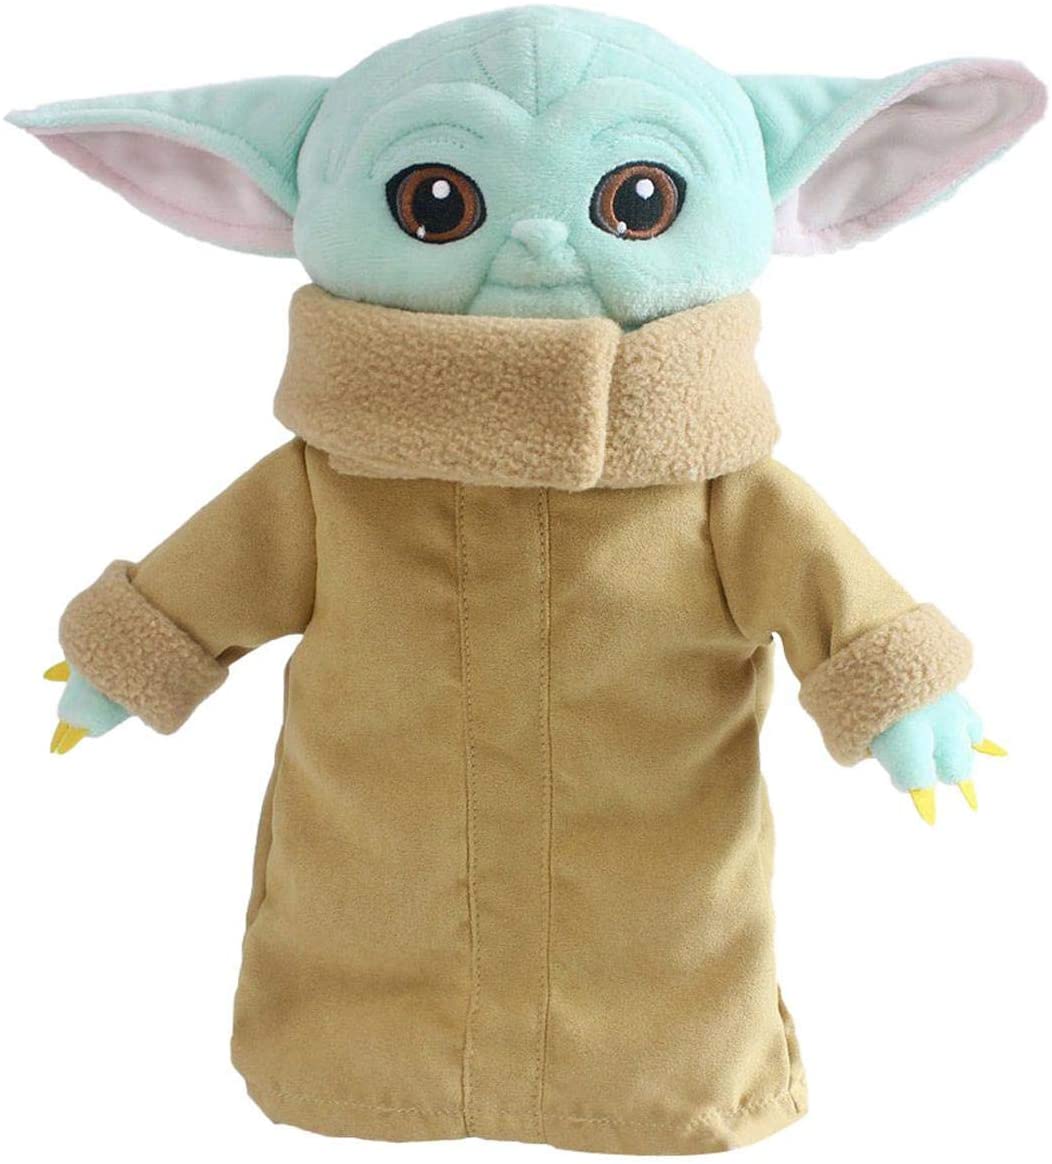 Baby Yoda Plush Figure Toys, For Kids, Stars Wars The Mandalorian Baby Yoda Teddy Plushie Soft Stuffed Doll The Child Collectible Doll Yoda Gift For Kids(9.8 Inch)